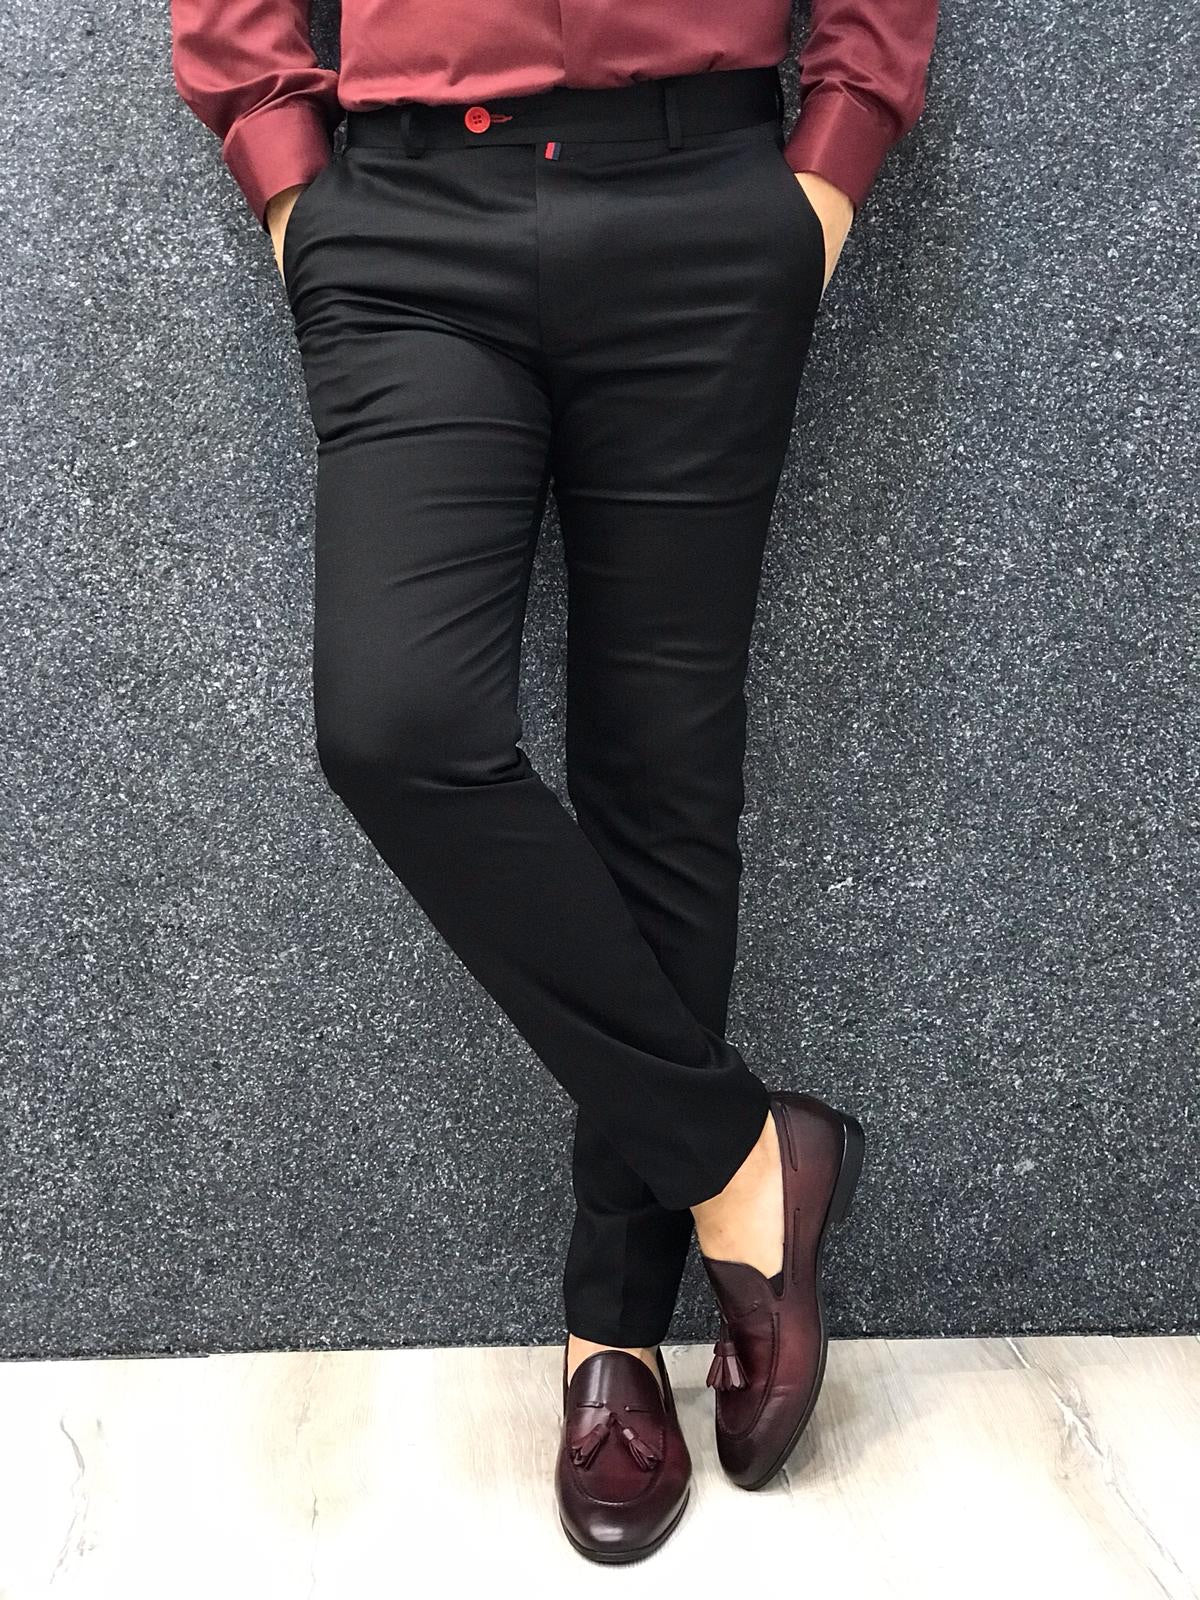 Buy Plus Size Women Black Colour Formal Pants (36) at Amazon.in